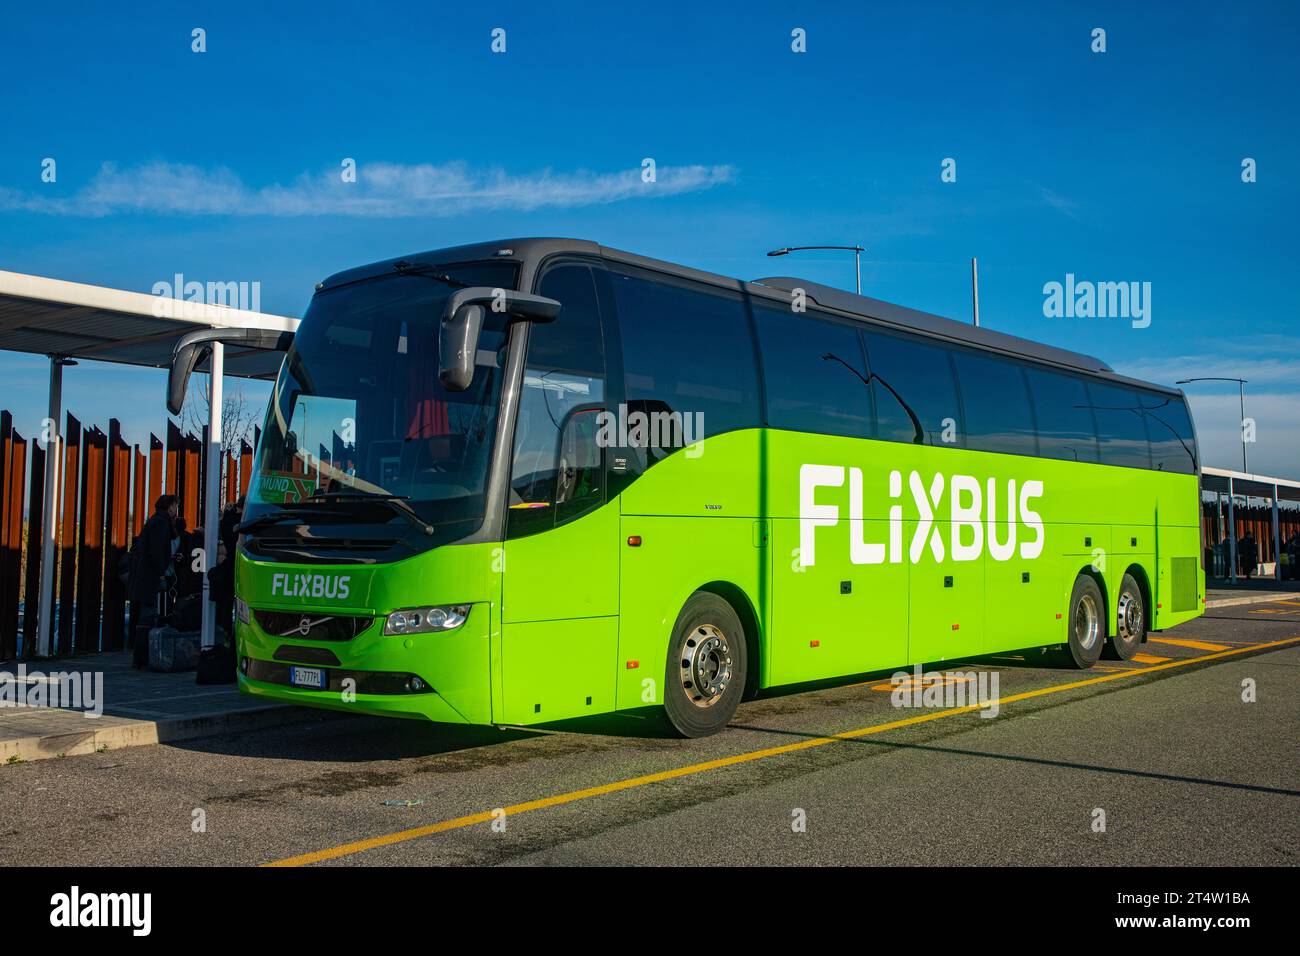 Flixbus europe -Fotos und -Bildmaterial in hoher Auflösung – Alamy